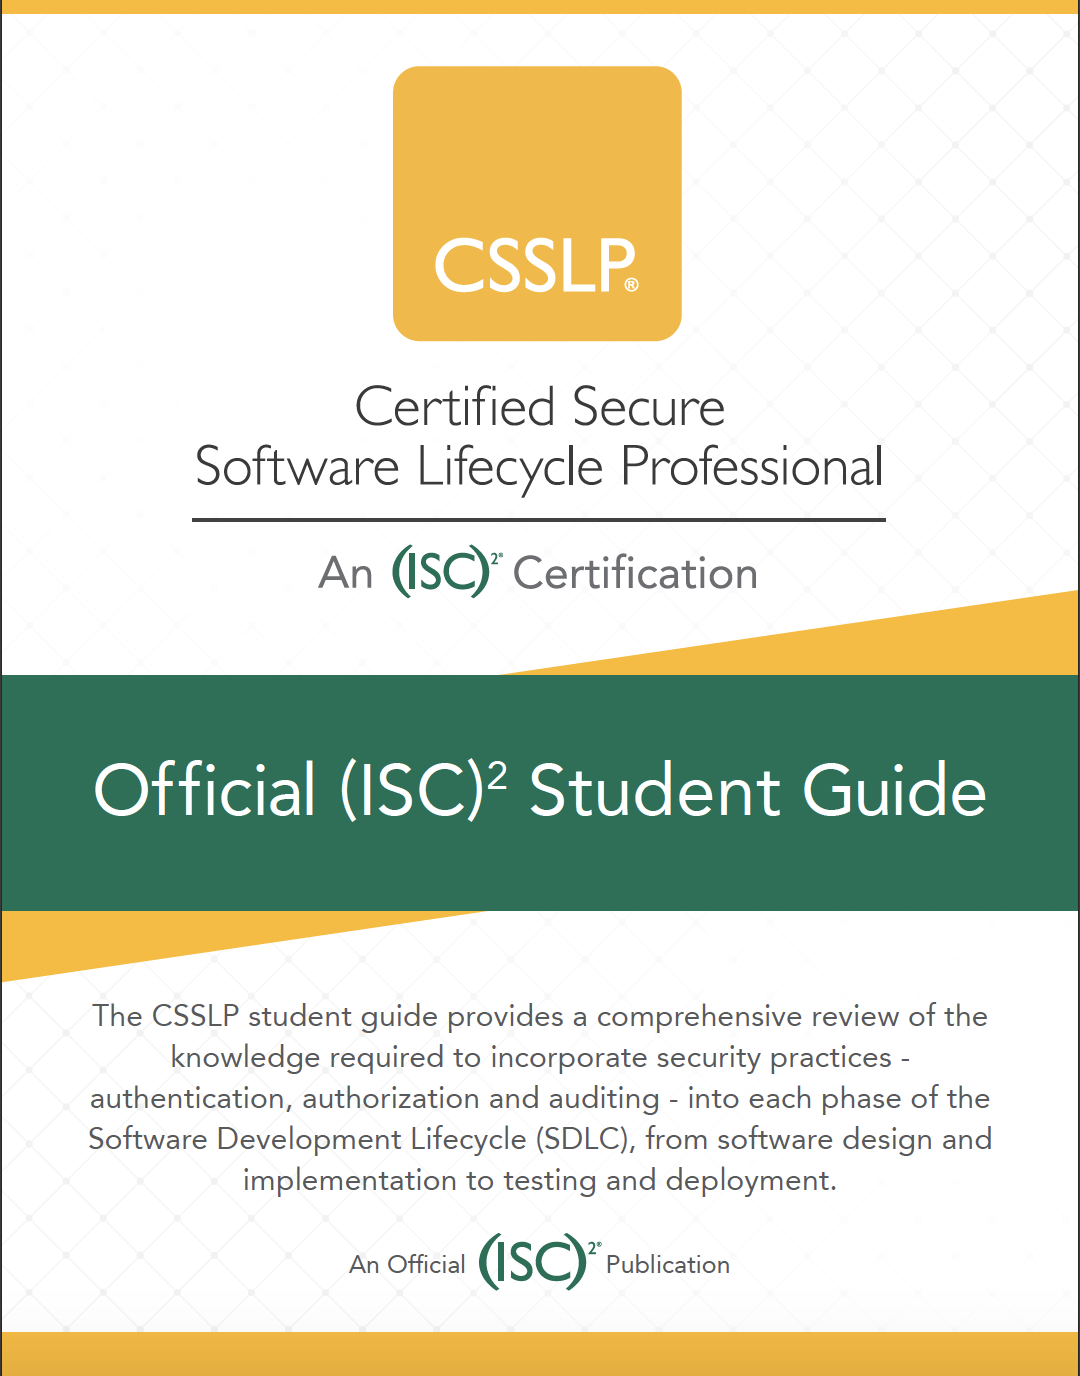 Official ISC Student Guide（日本語版もあり）